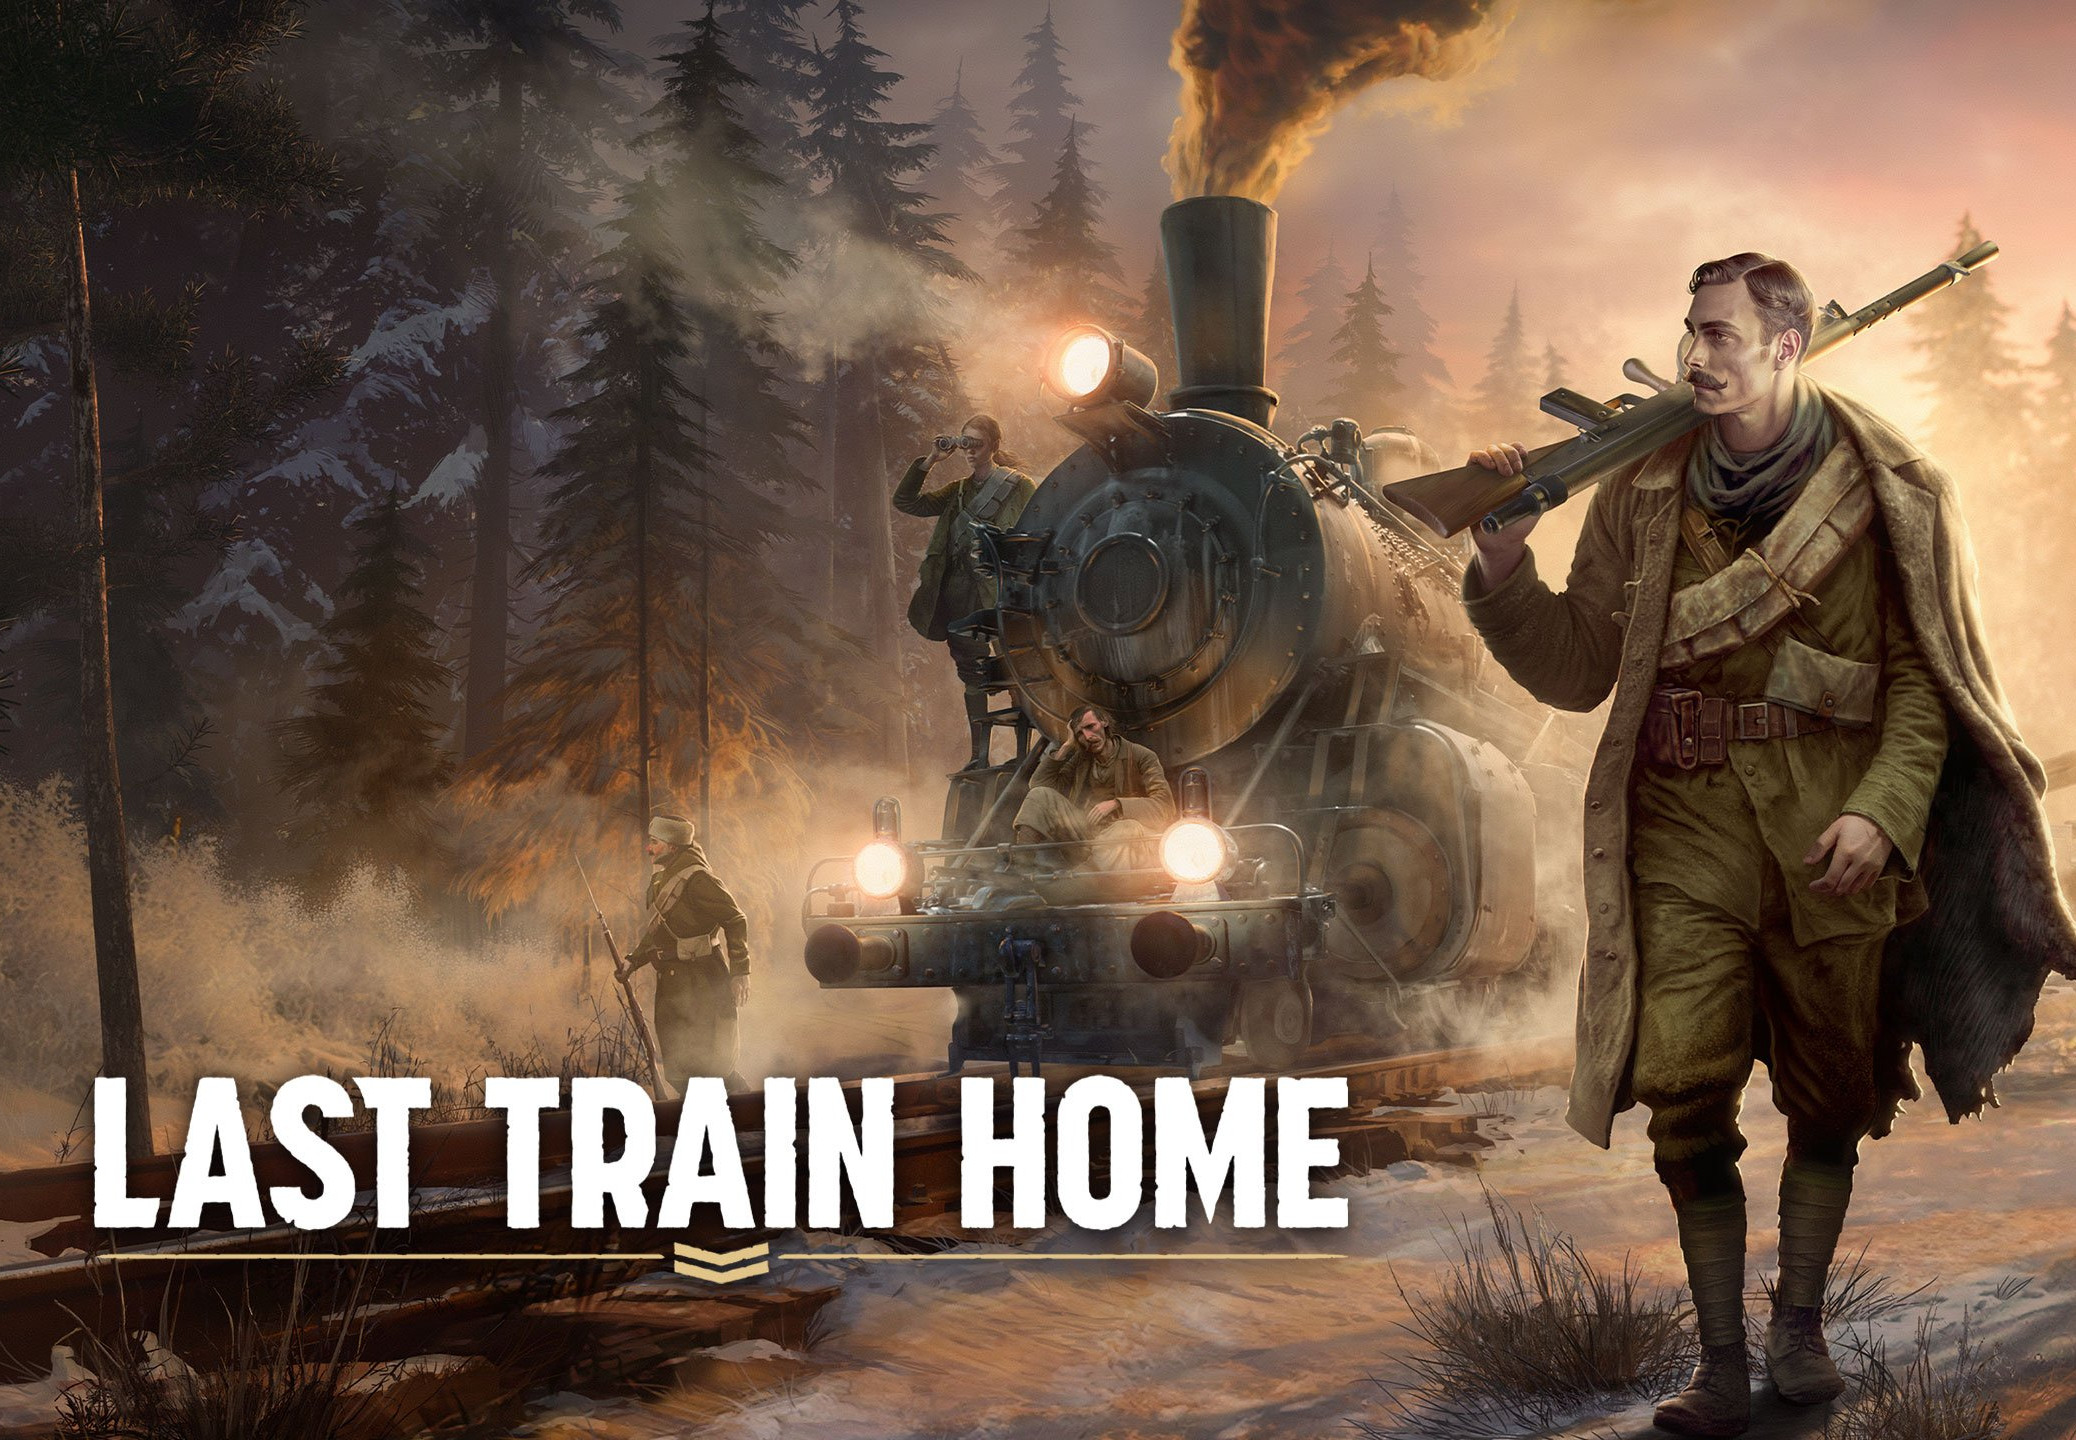 Last Train Home Digital Deluxe Edition EU Steam CD Key